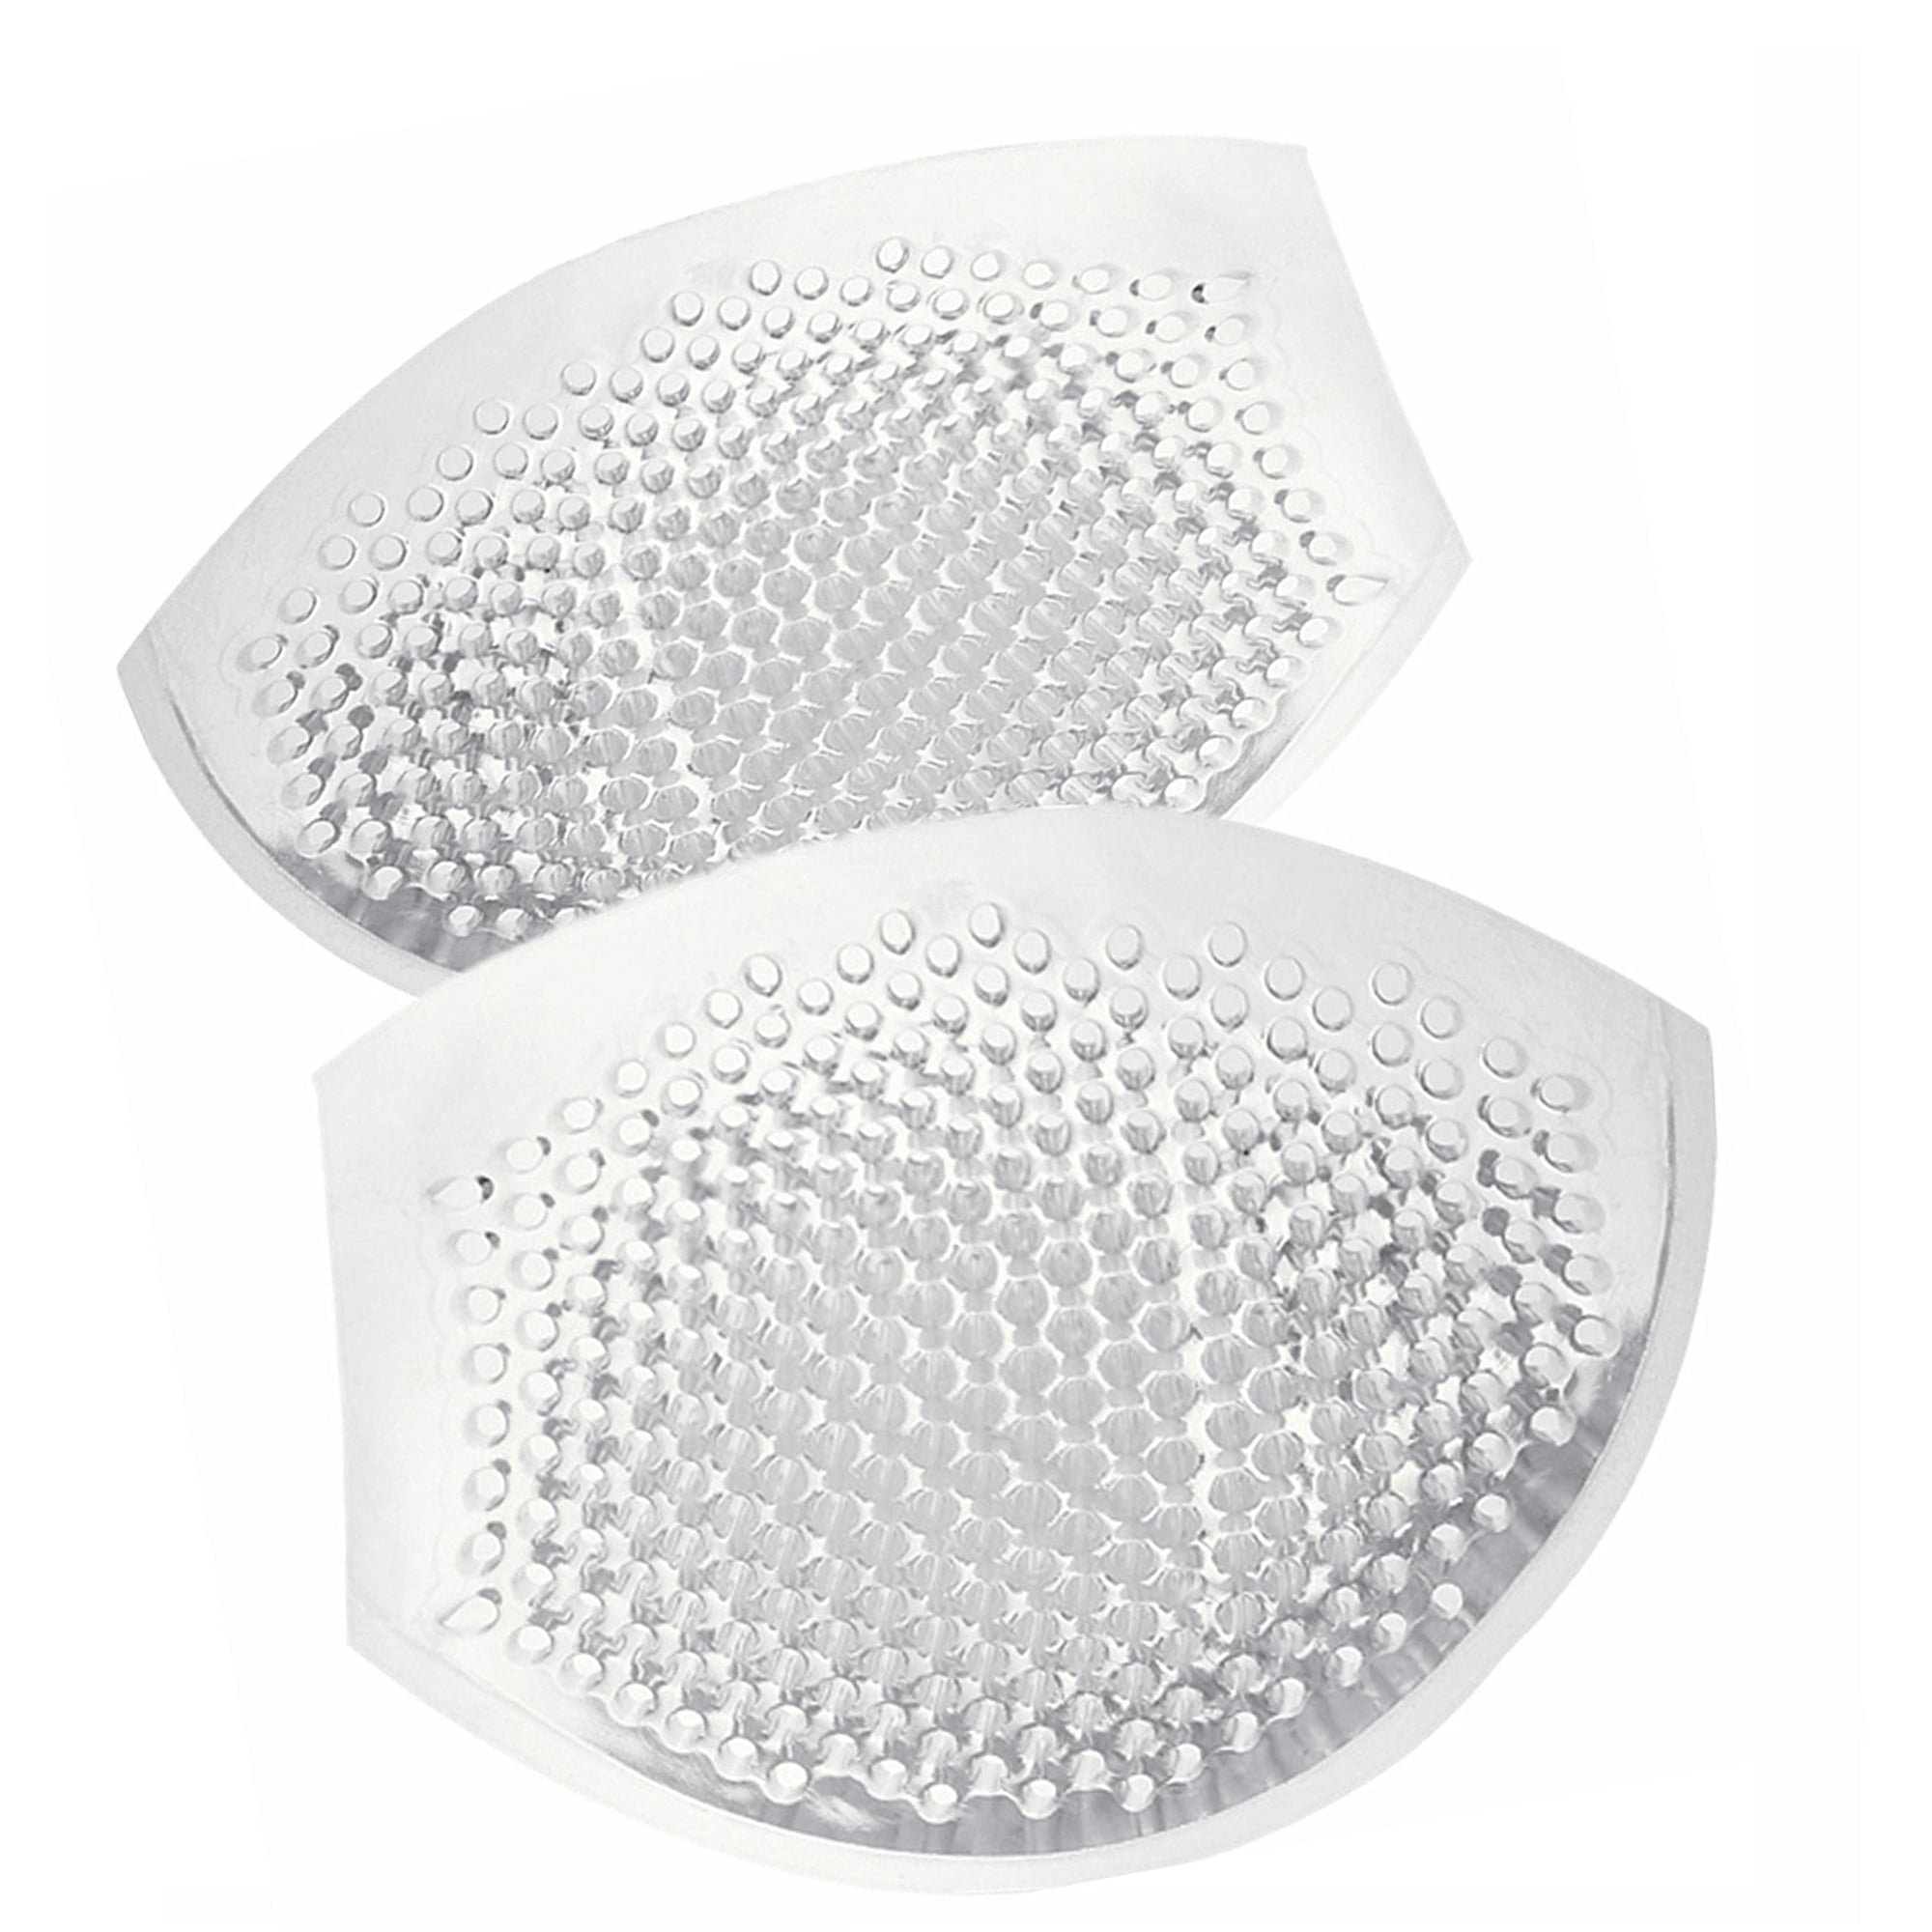 Breathable Silicone Bra Inserts,Honeycomb Semi-Adhesive Breast